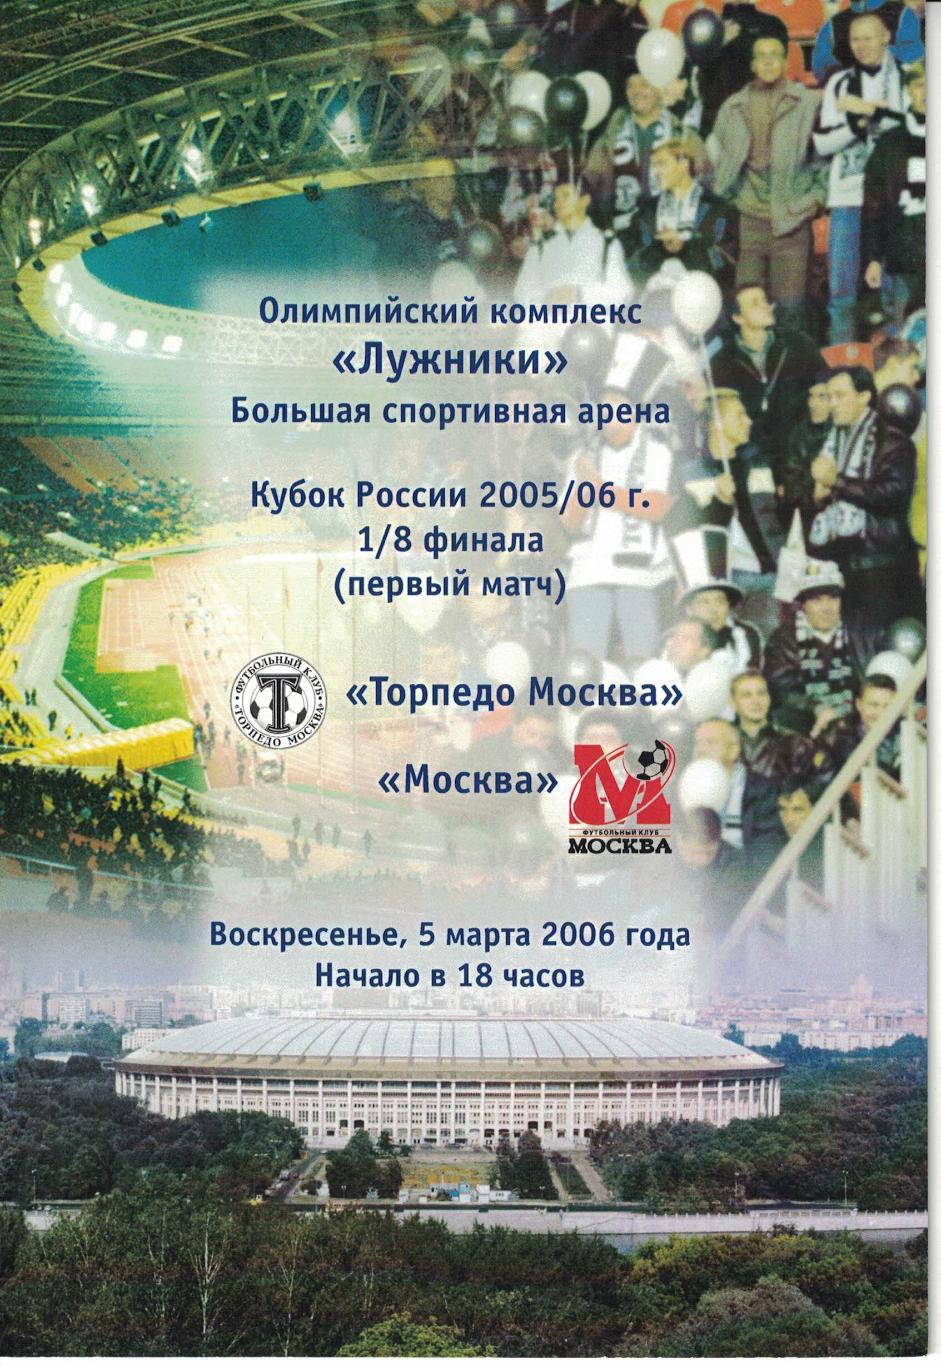 Торпедо Москва - Москва Москва 05.03.2006 Кубок России 1/8 финала 1